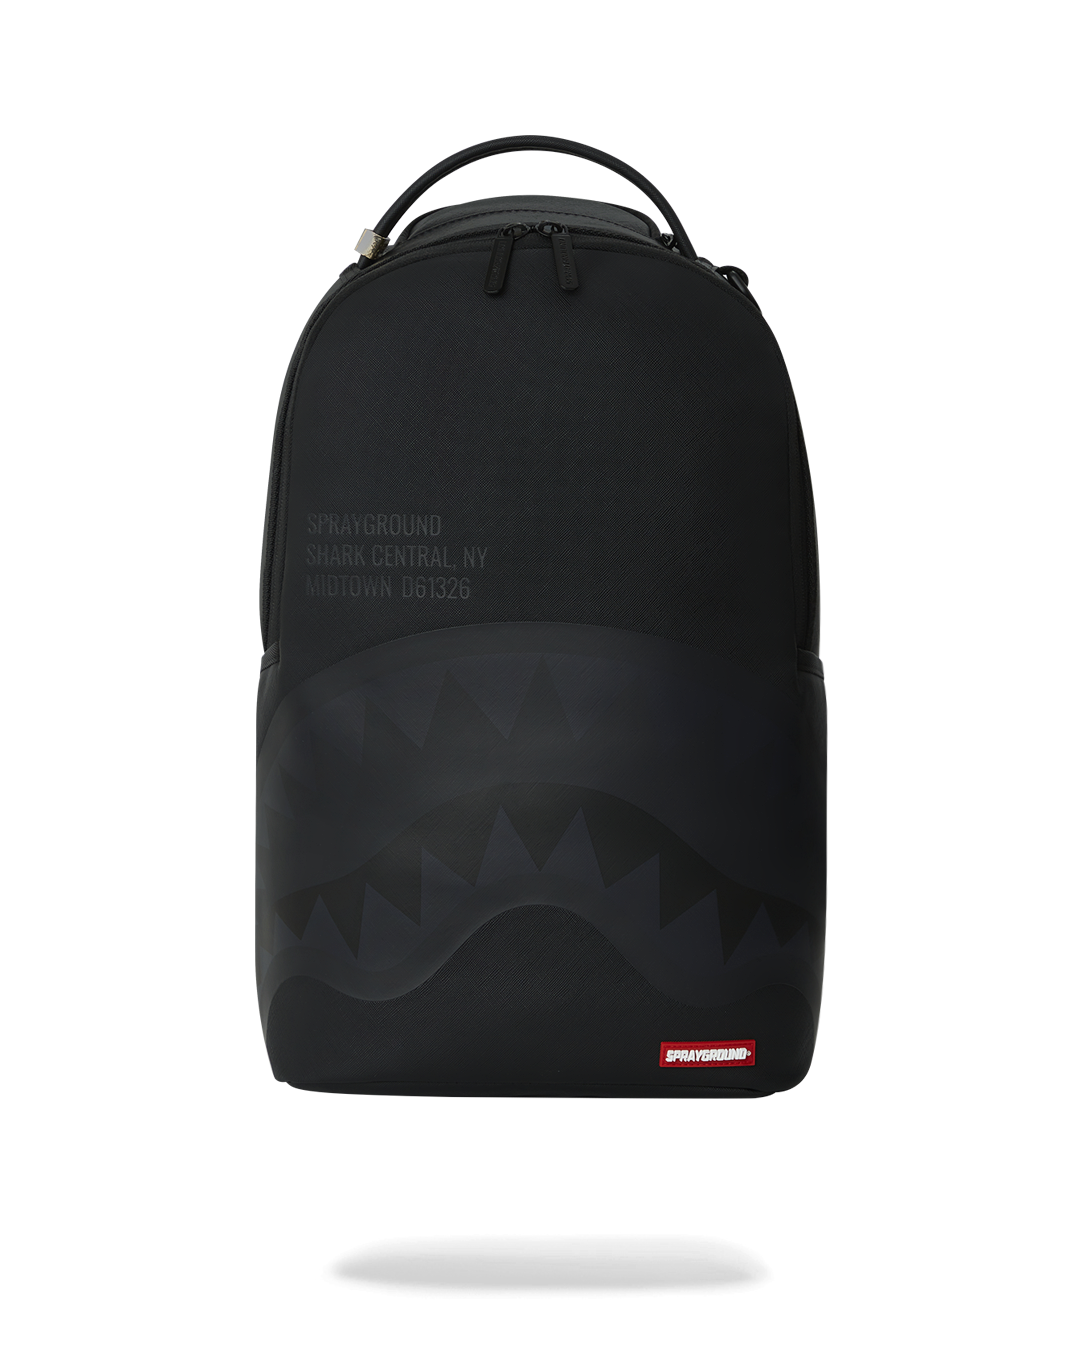 Sprayground - Shark Central Backpack (Dlxv)